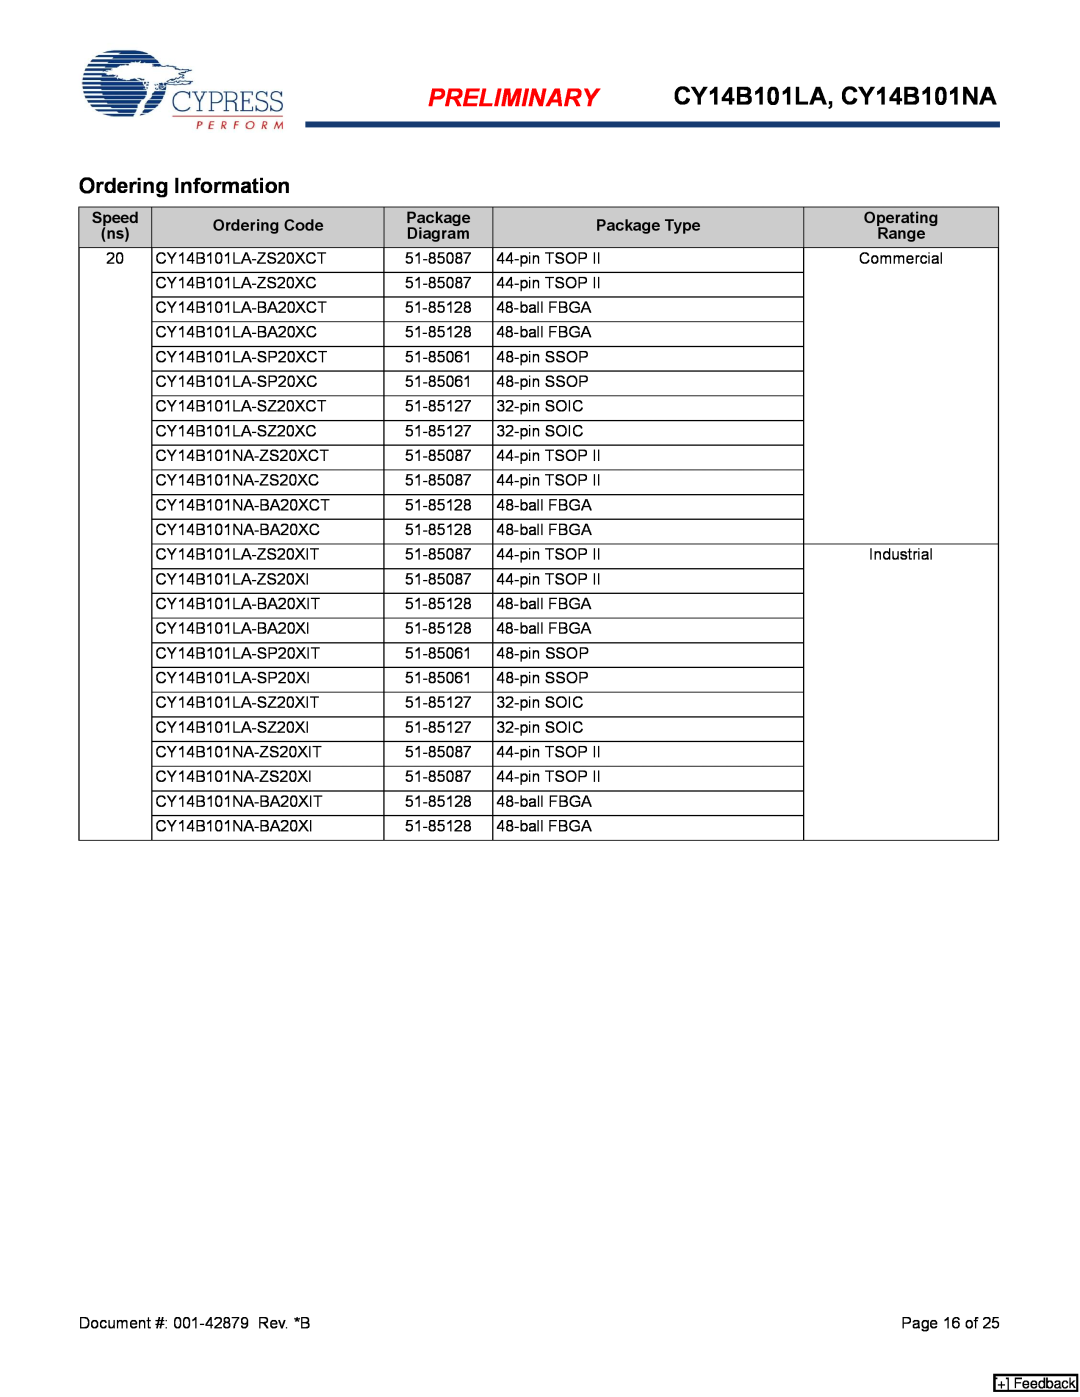 Cypress manual Ordering Information, Preliminary, CY14B101LA, CY14B101NA 